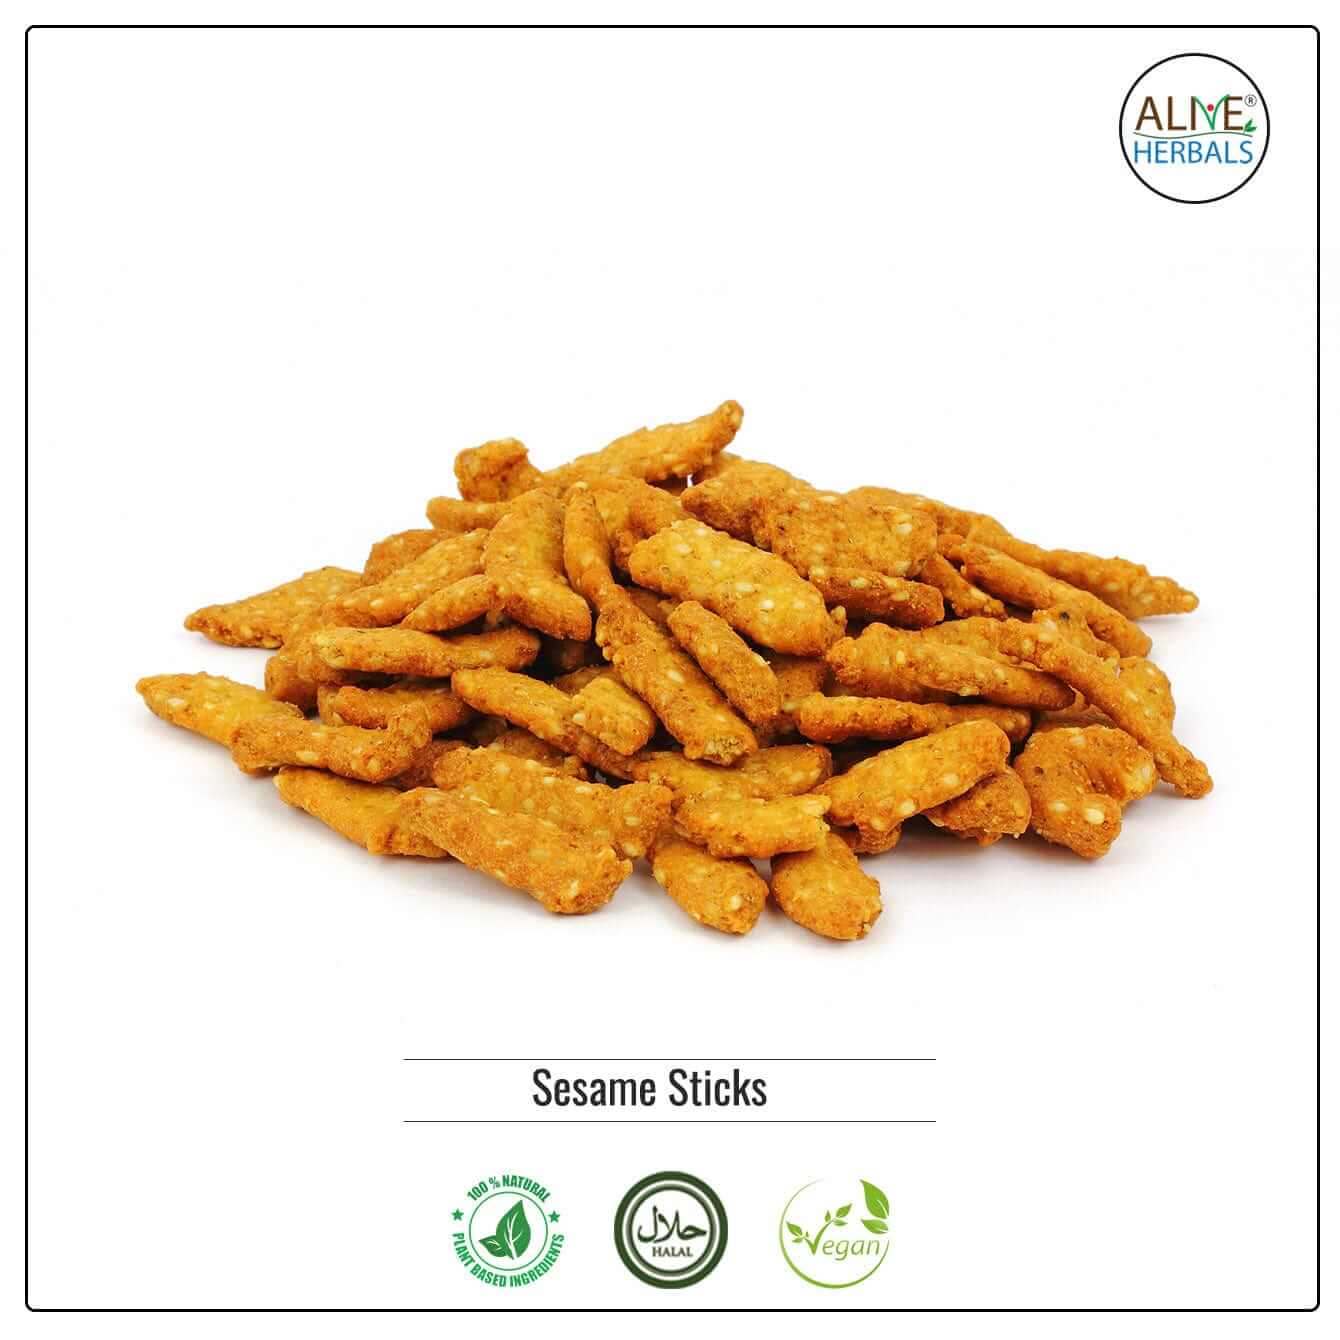 Salted Sesame Sticks - Buy at Natural Food Store | Alive Herbals.